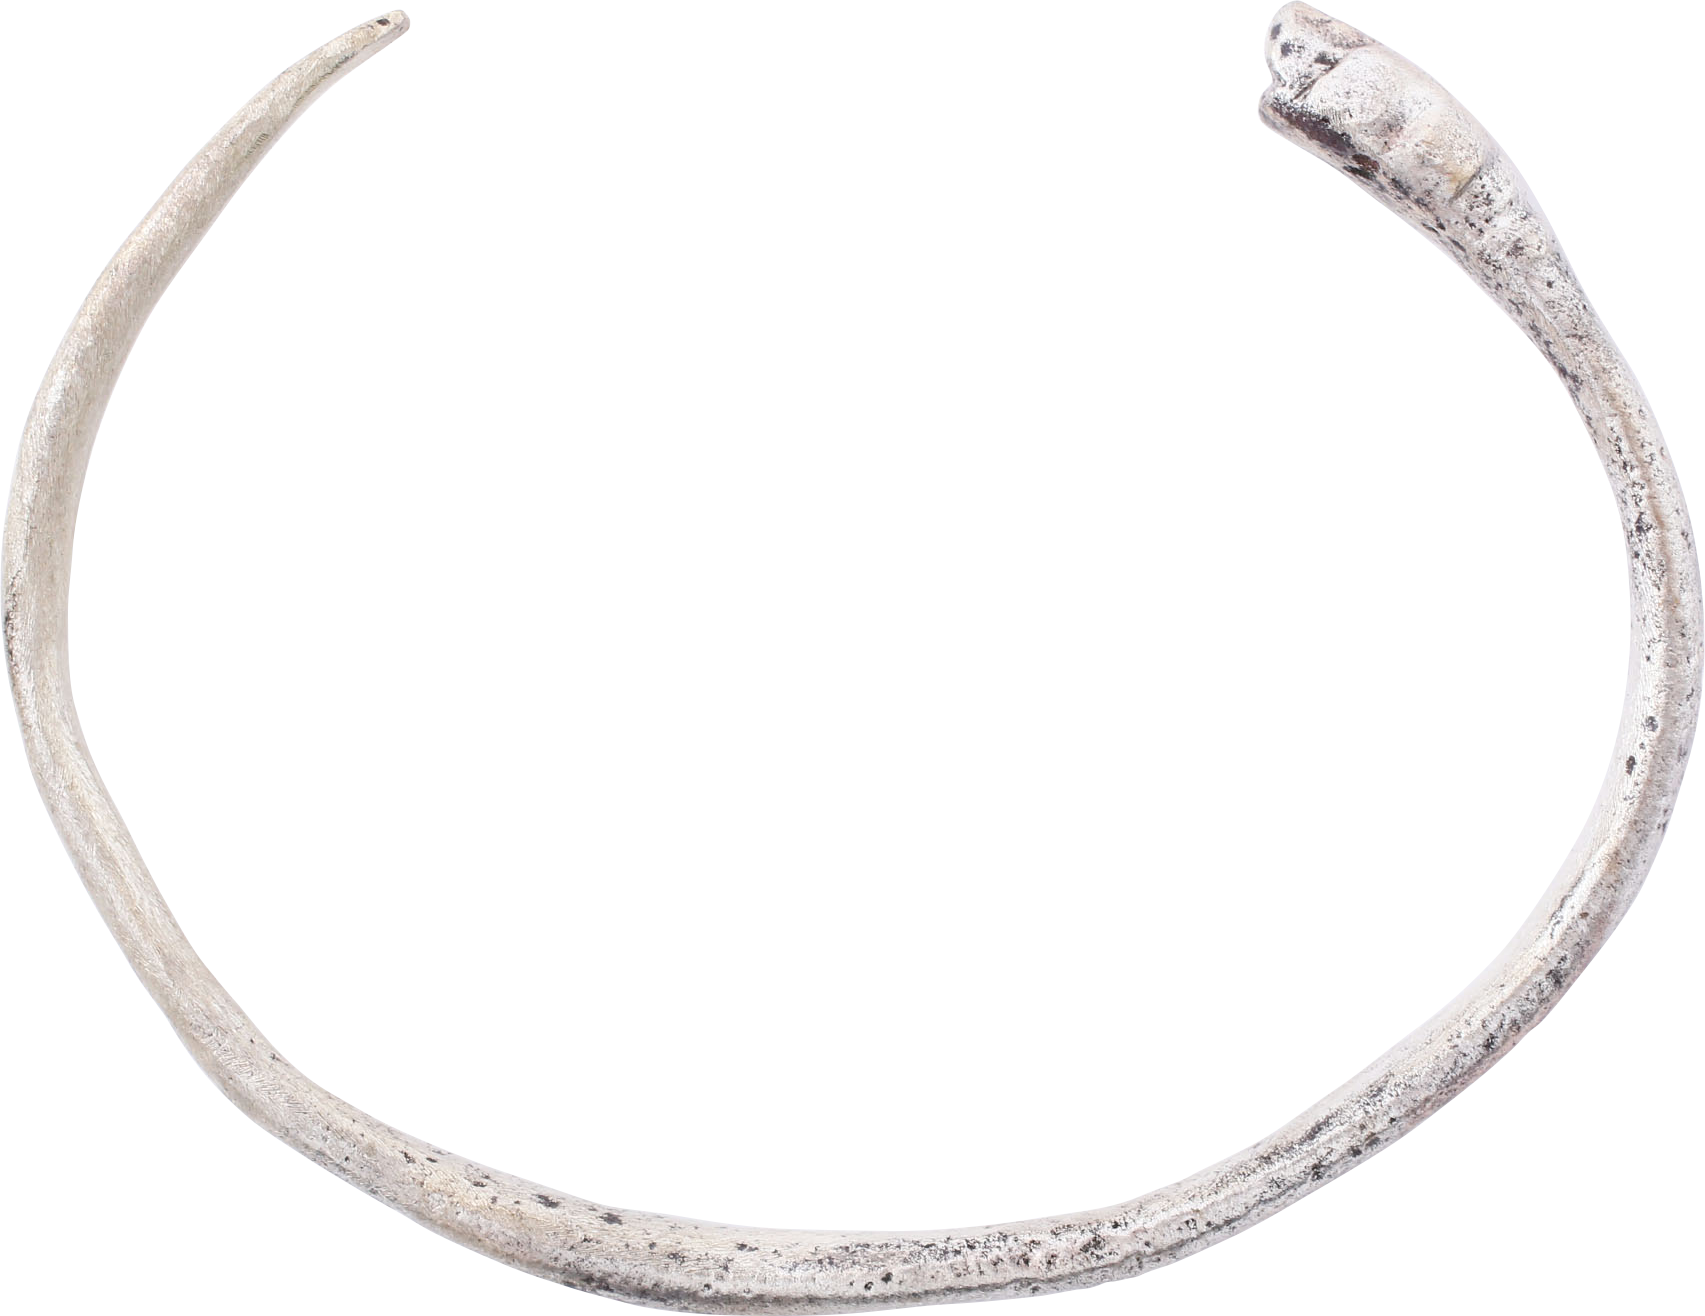 VIKING BRACELET, 10TH-11TH CENTURY AD - Fagan Arms (8202616012974)